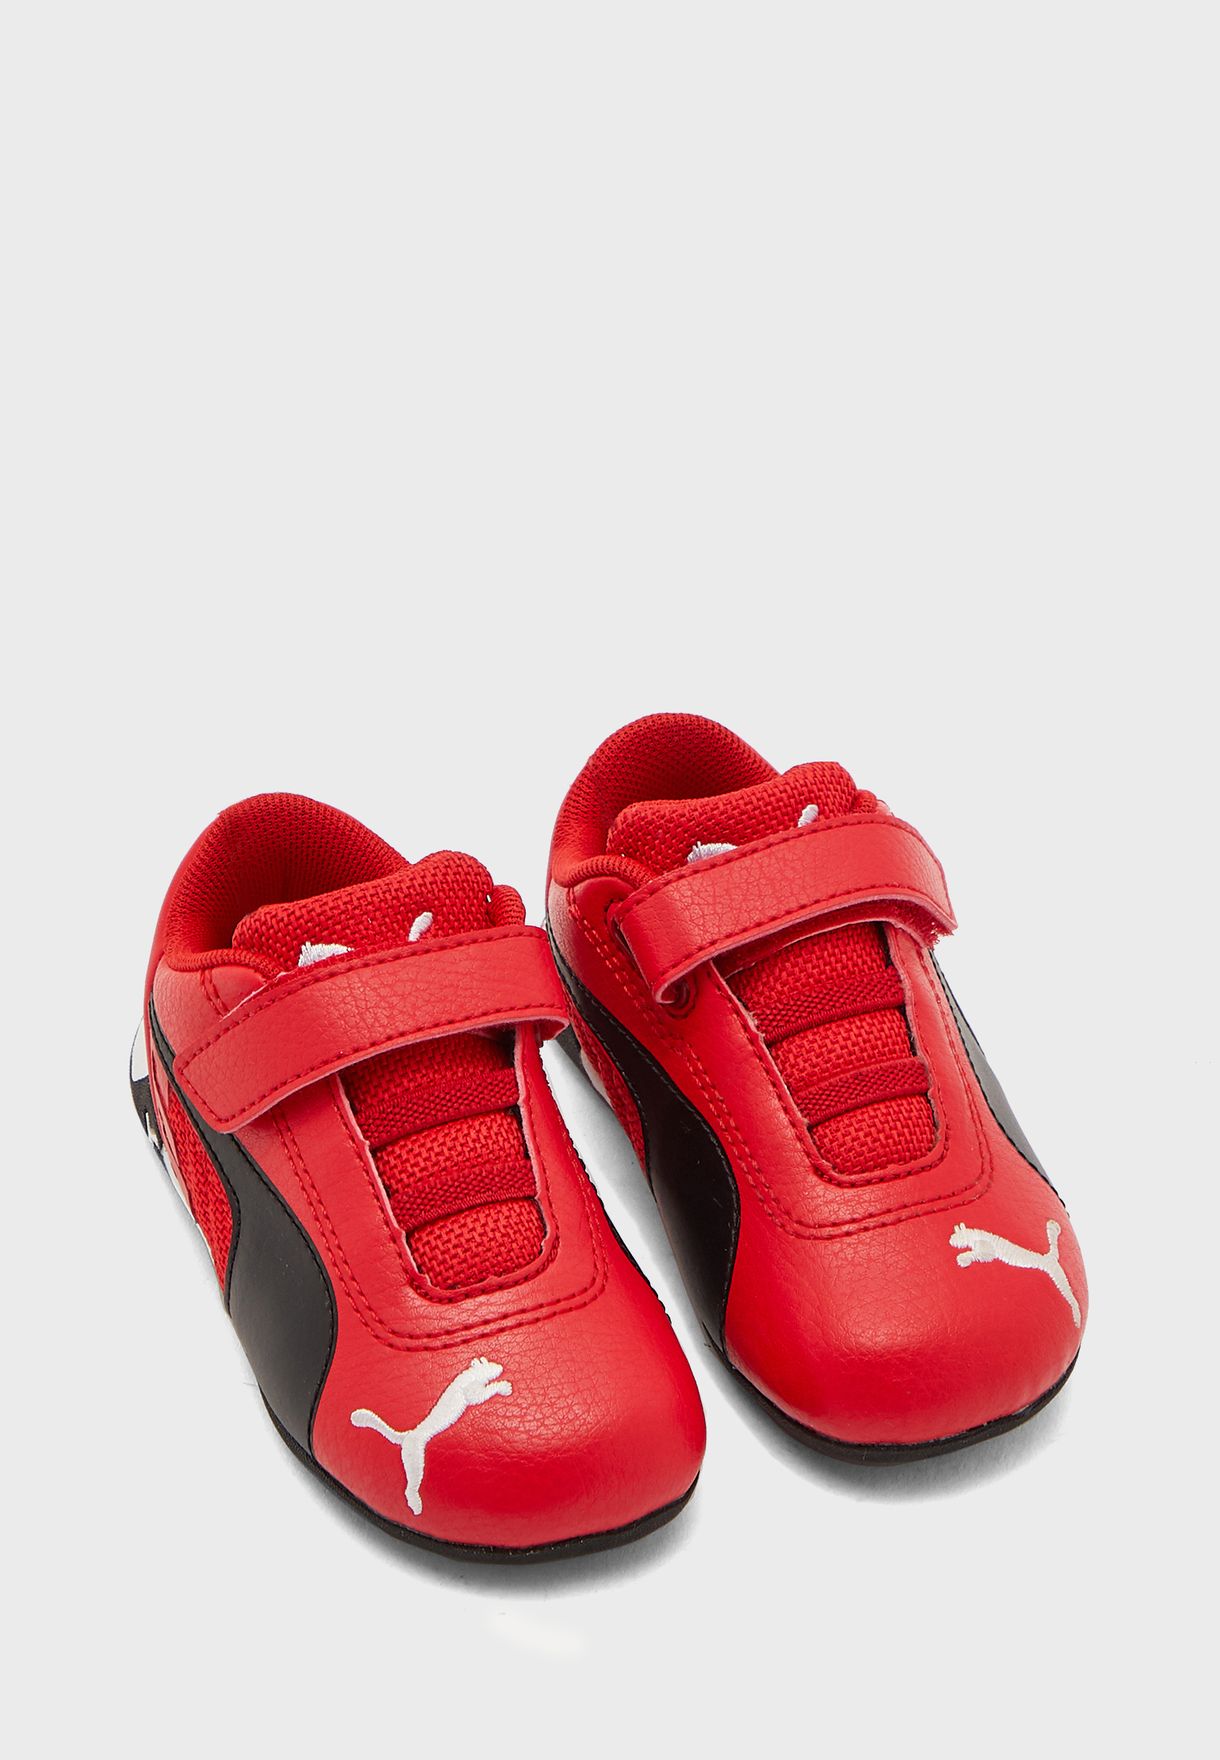 ferrari baby shoes